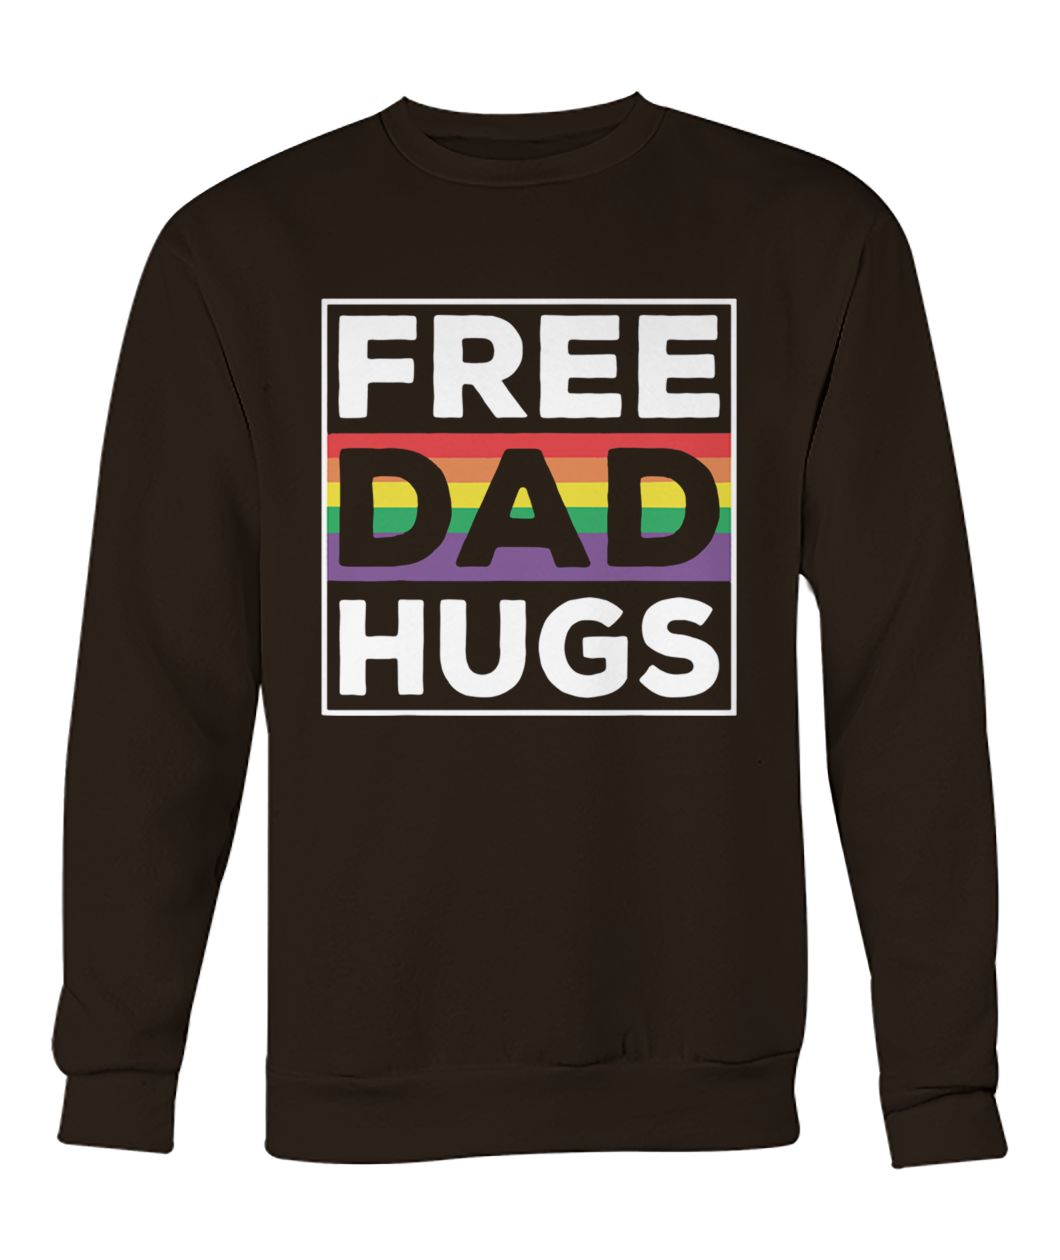 LGBT free dad hugs crew neck sweatshirt